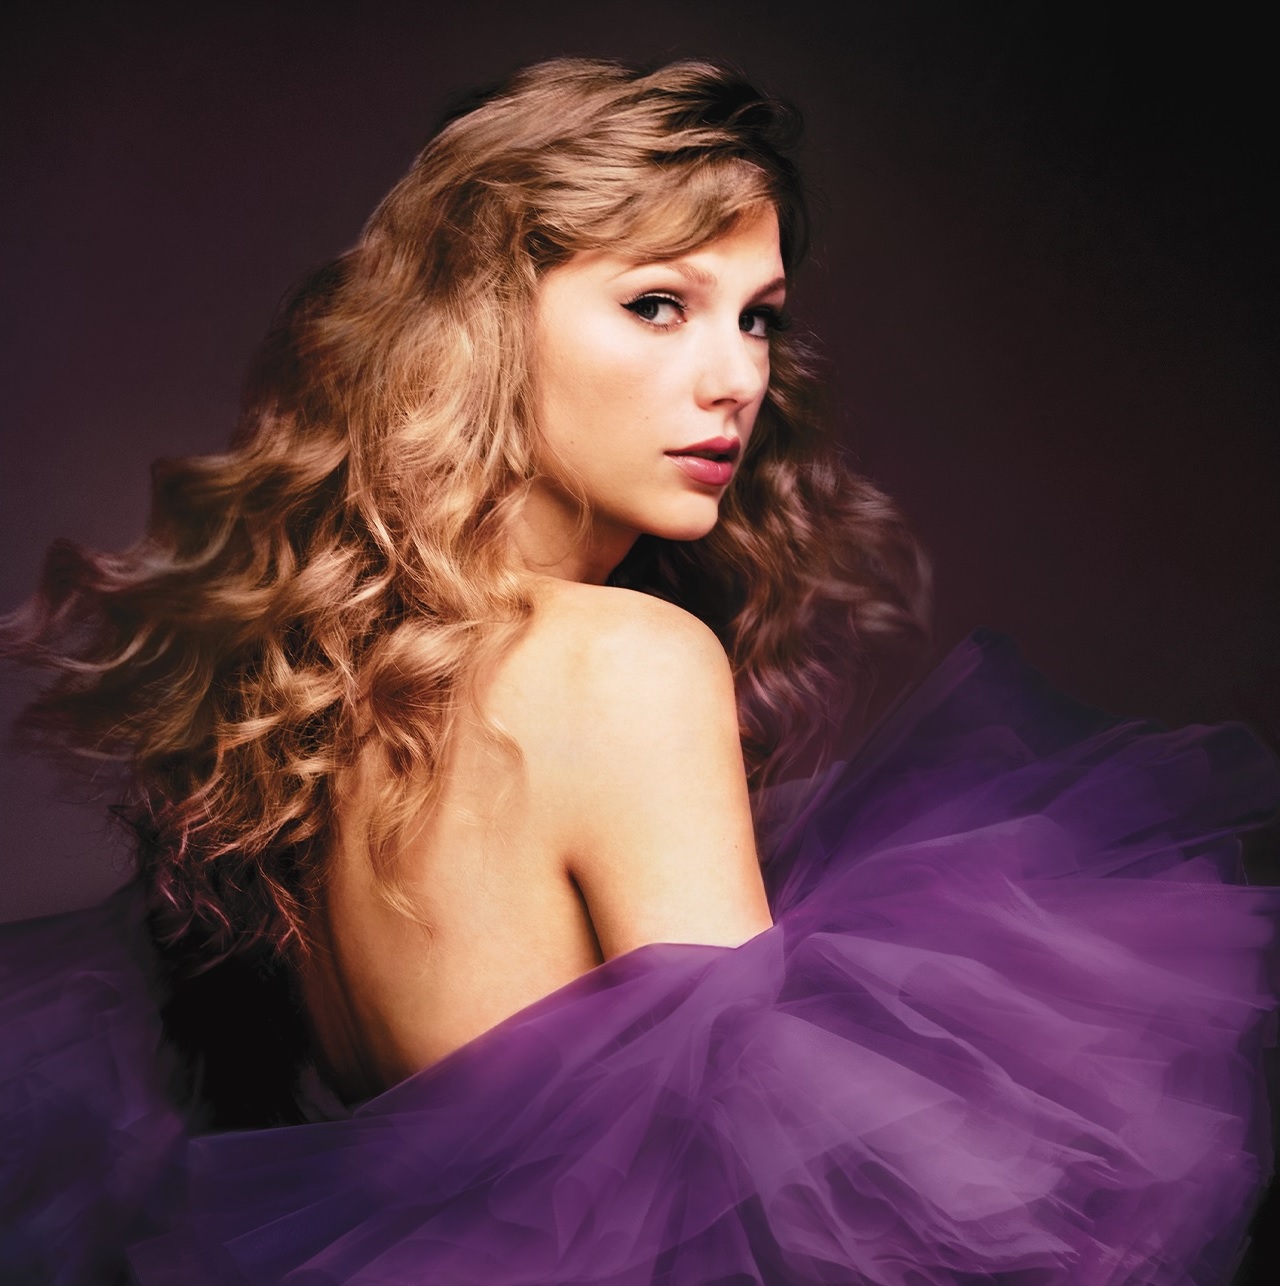 Taylor Swift - Midnights: Mahogany Edition CD - EMI